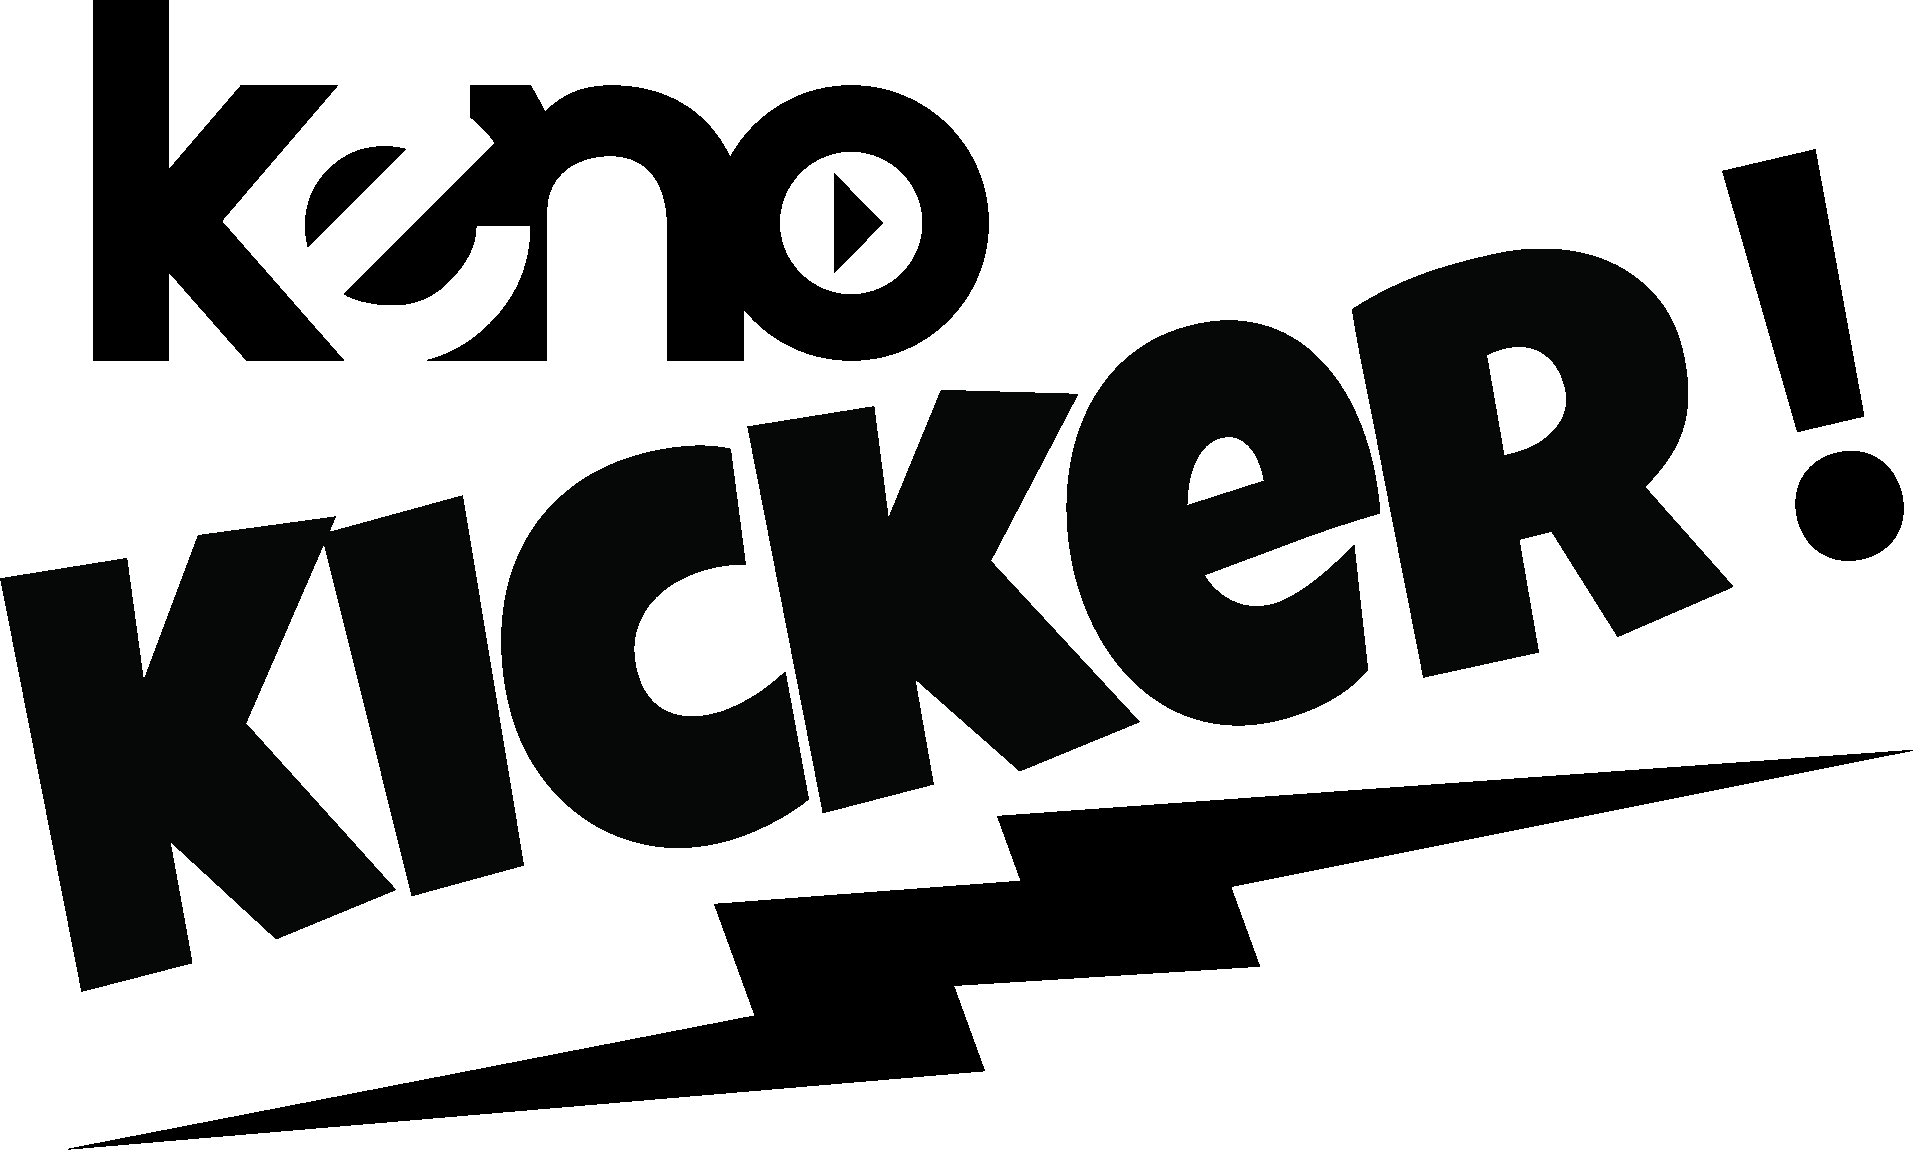 logo keno kicker words